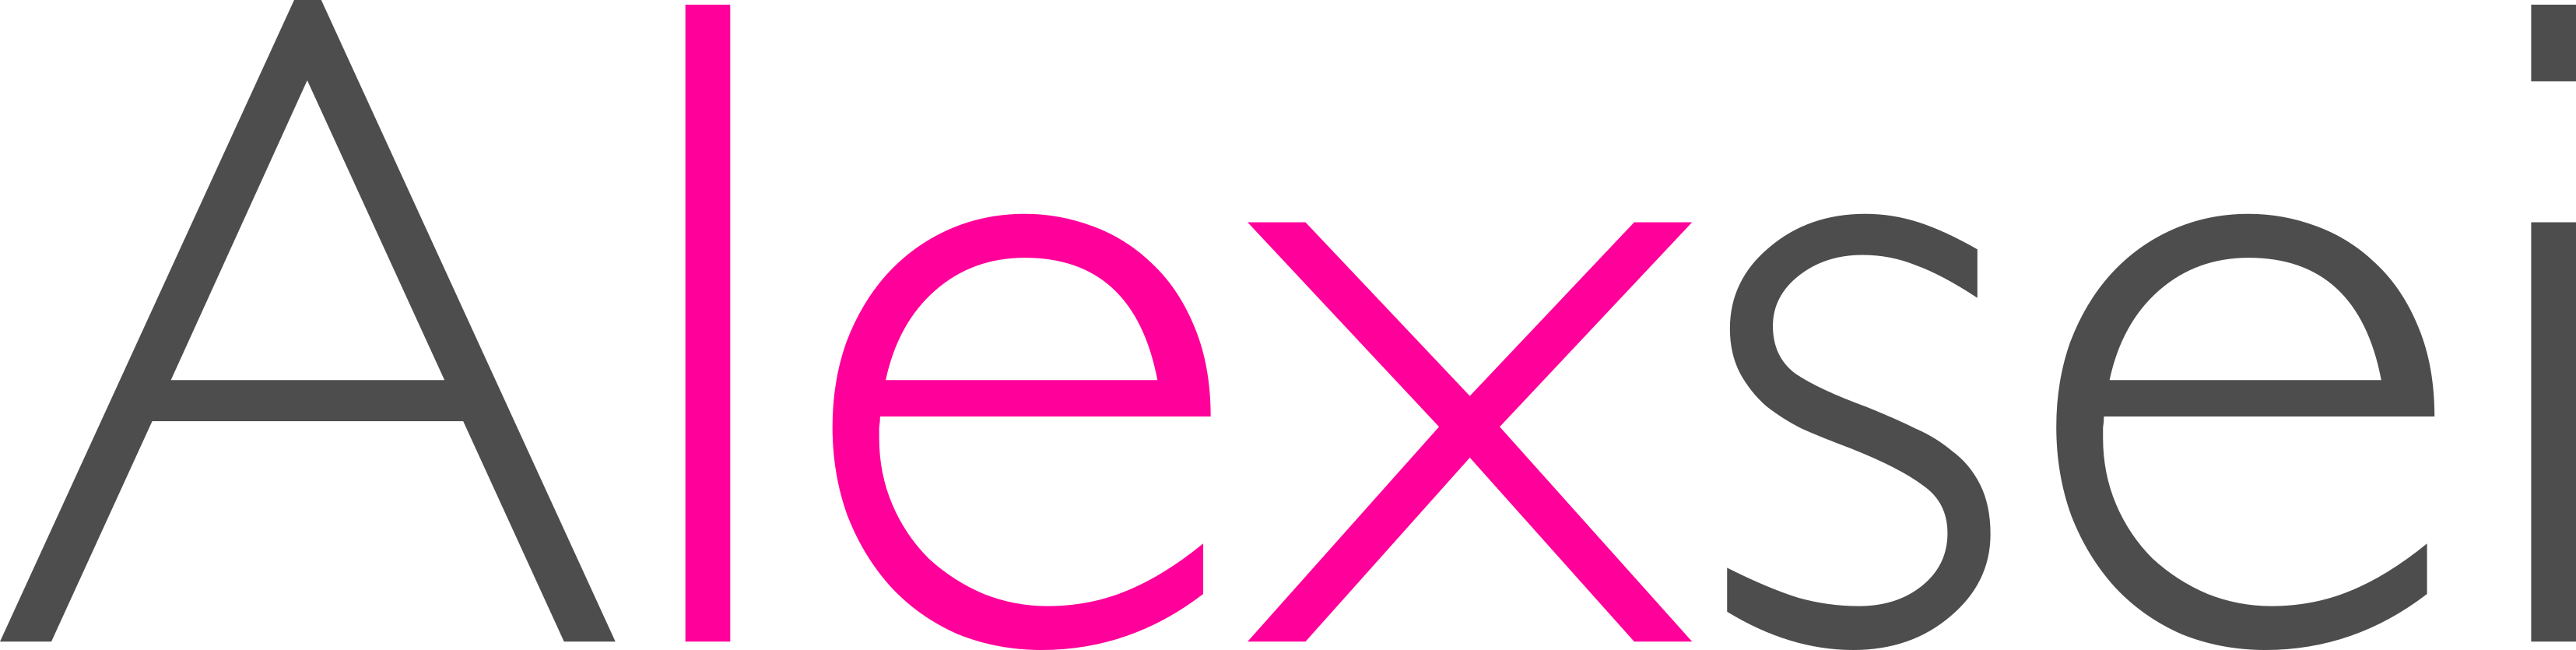 Alexsei search grey logo